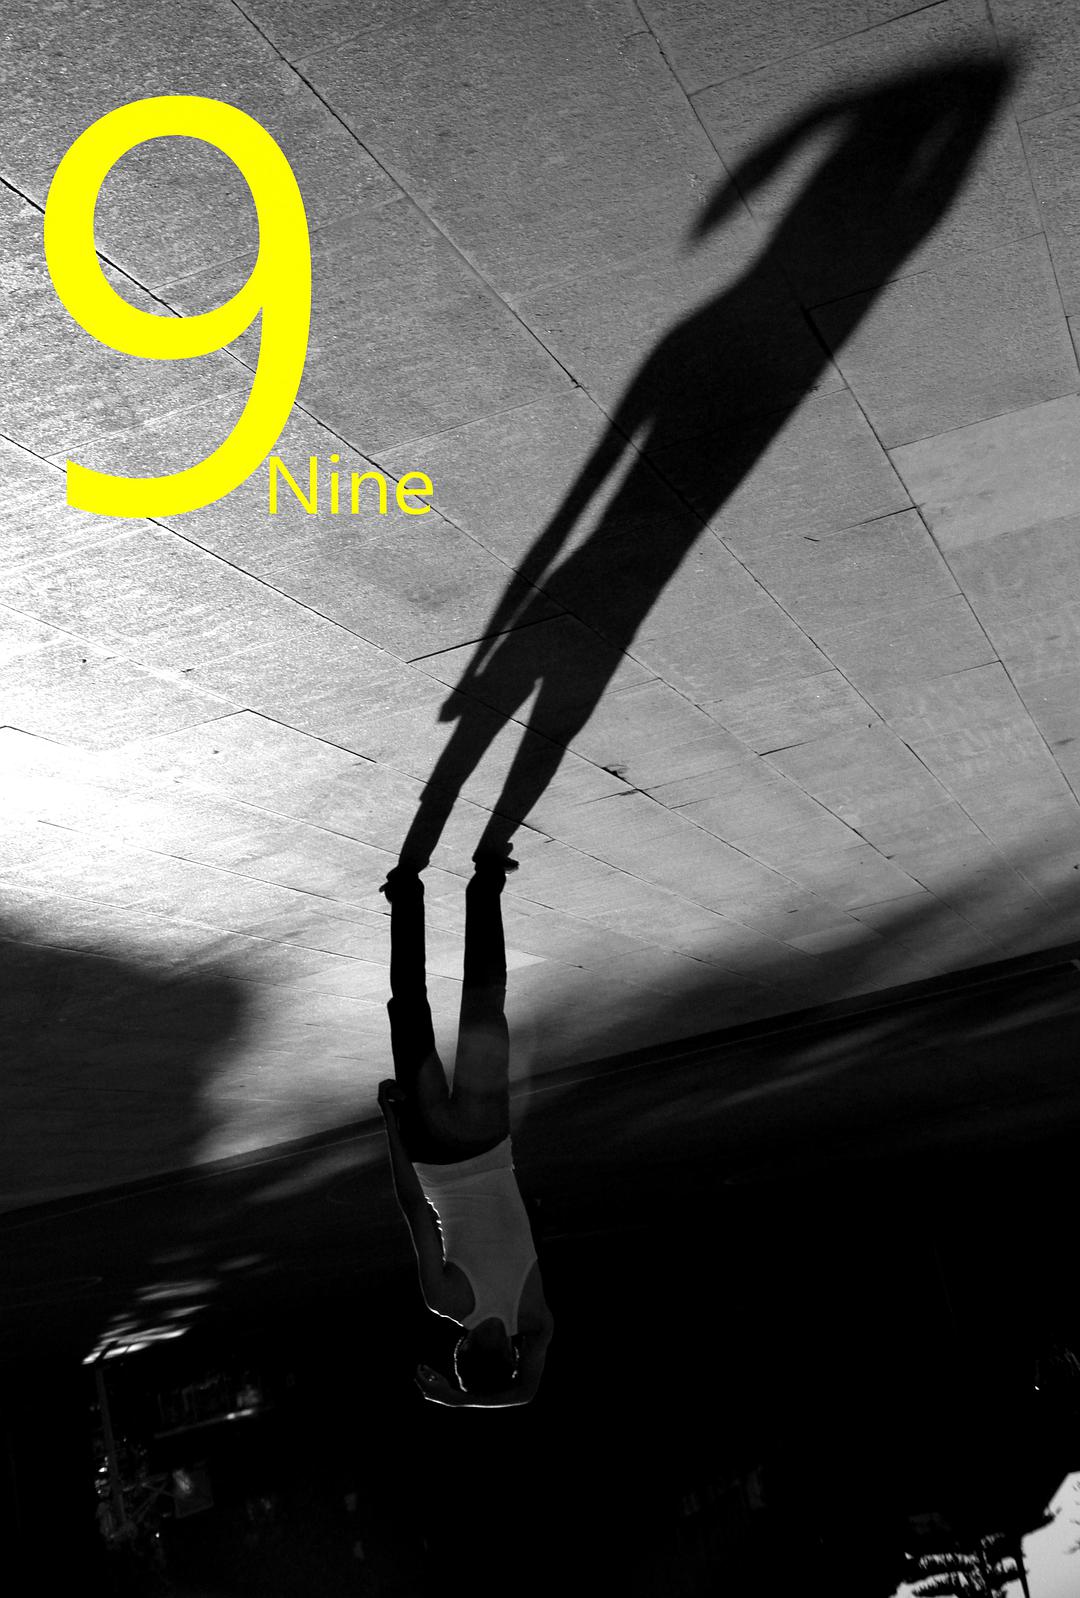 9nine